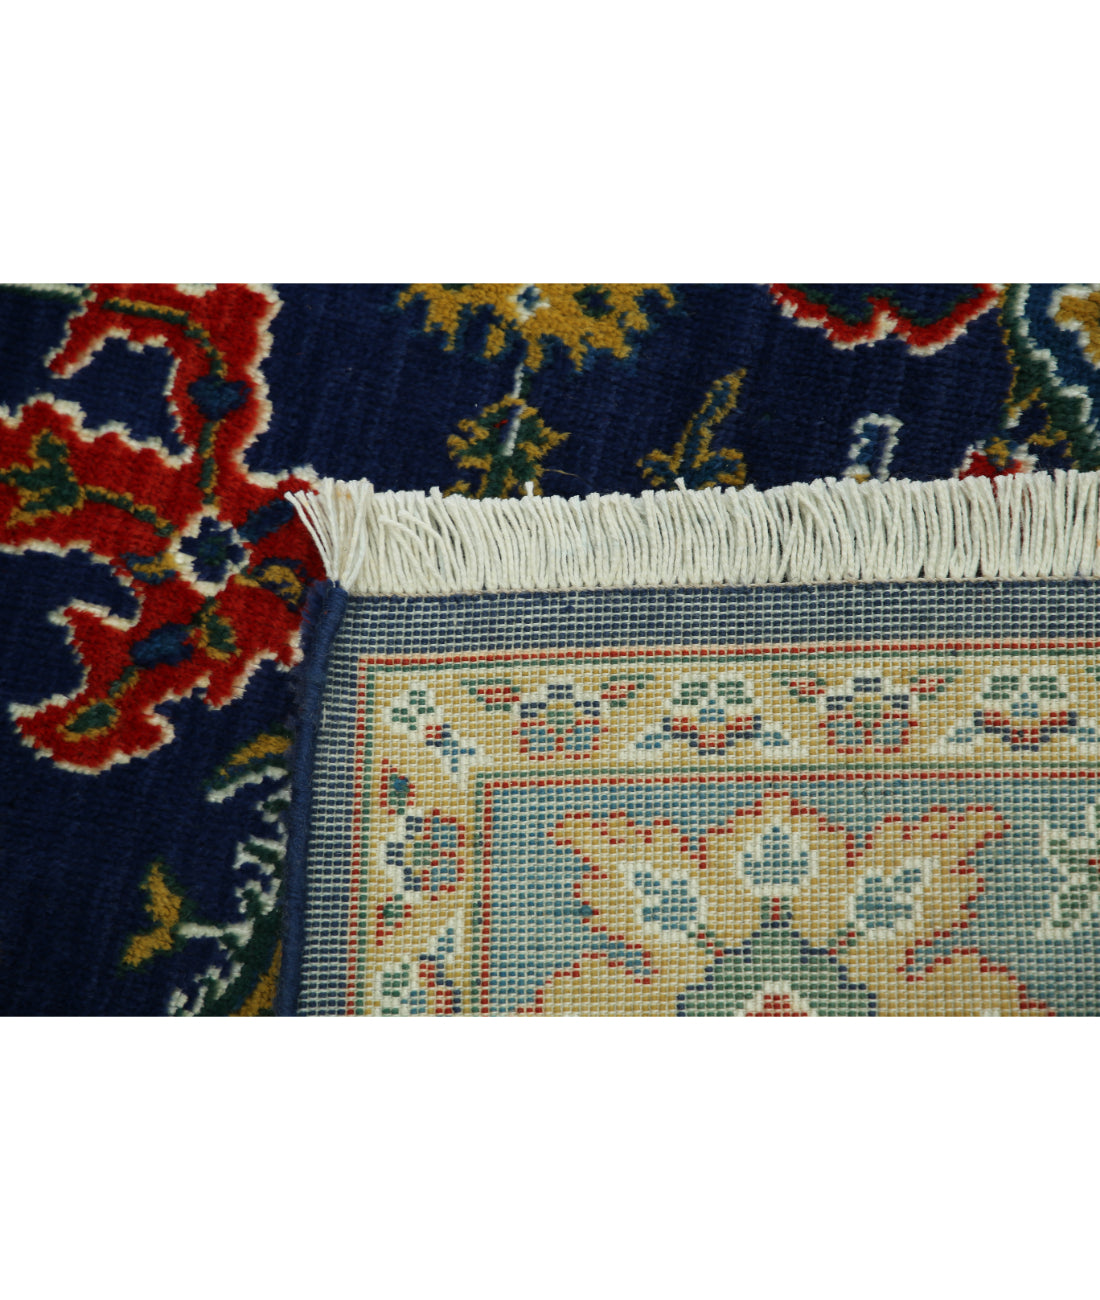 Gulshan Wool & Bamboo Silk Rug - 4'0'' x 5'10'' 4'0'' x 5'10'' (120 X 175) / Blue / Red